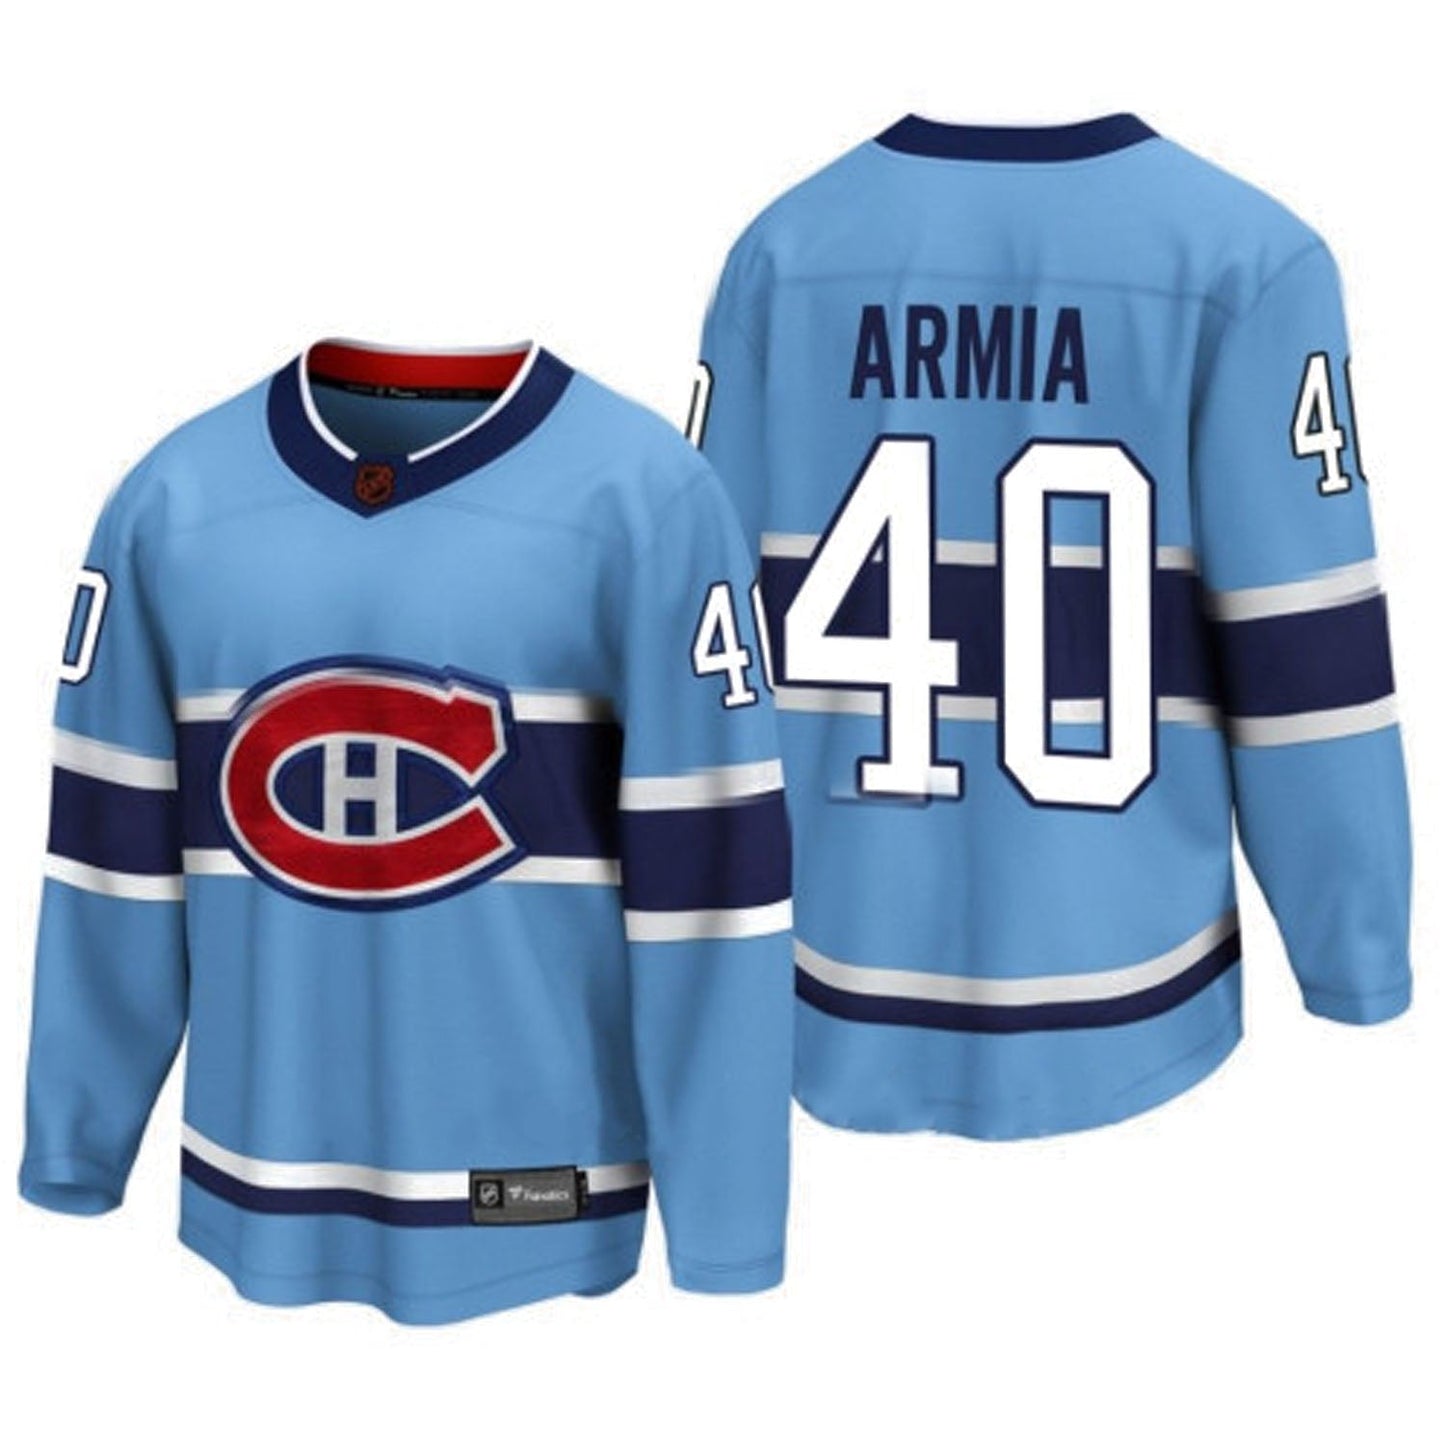 NHL Joel Armia Montreal Canadiens 40 Jersey